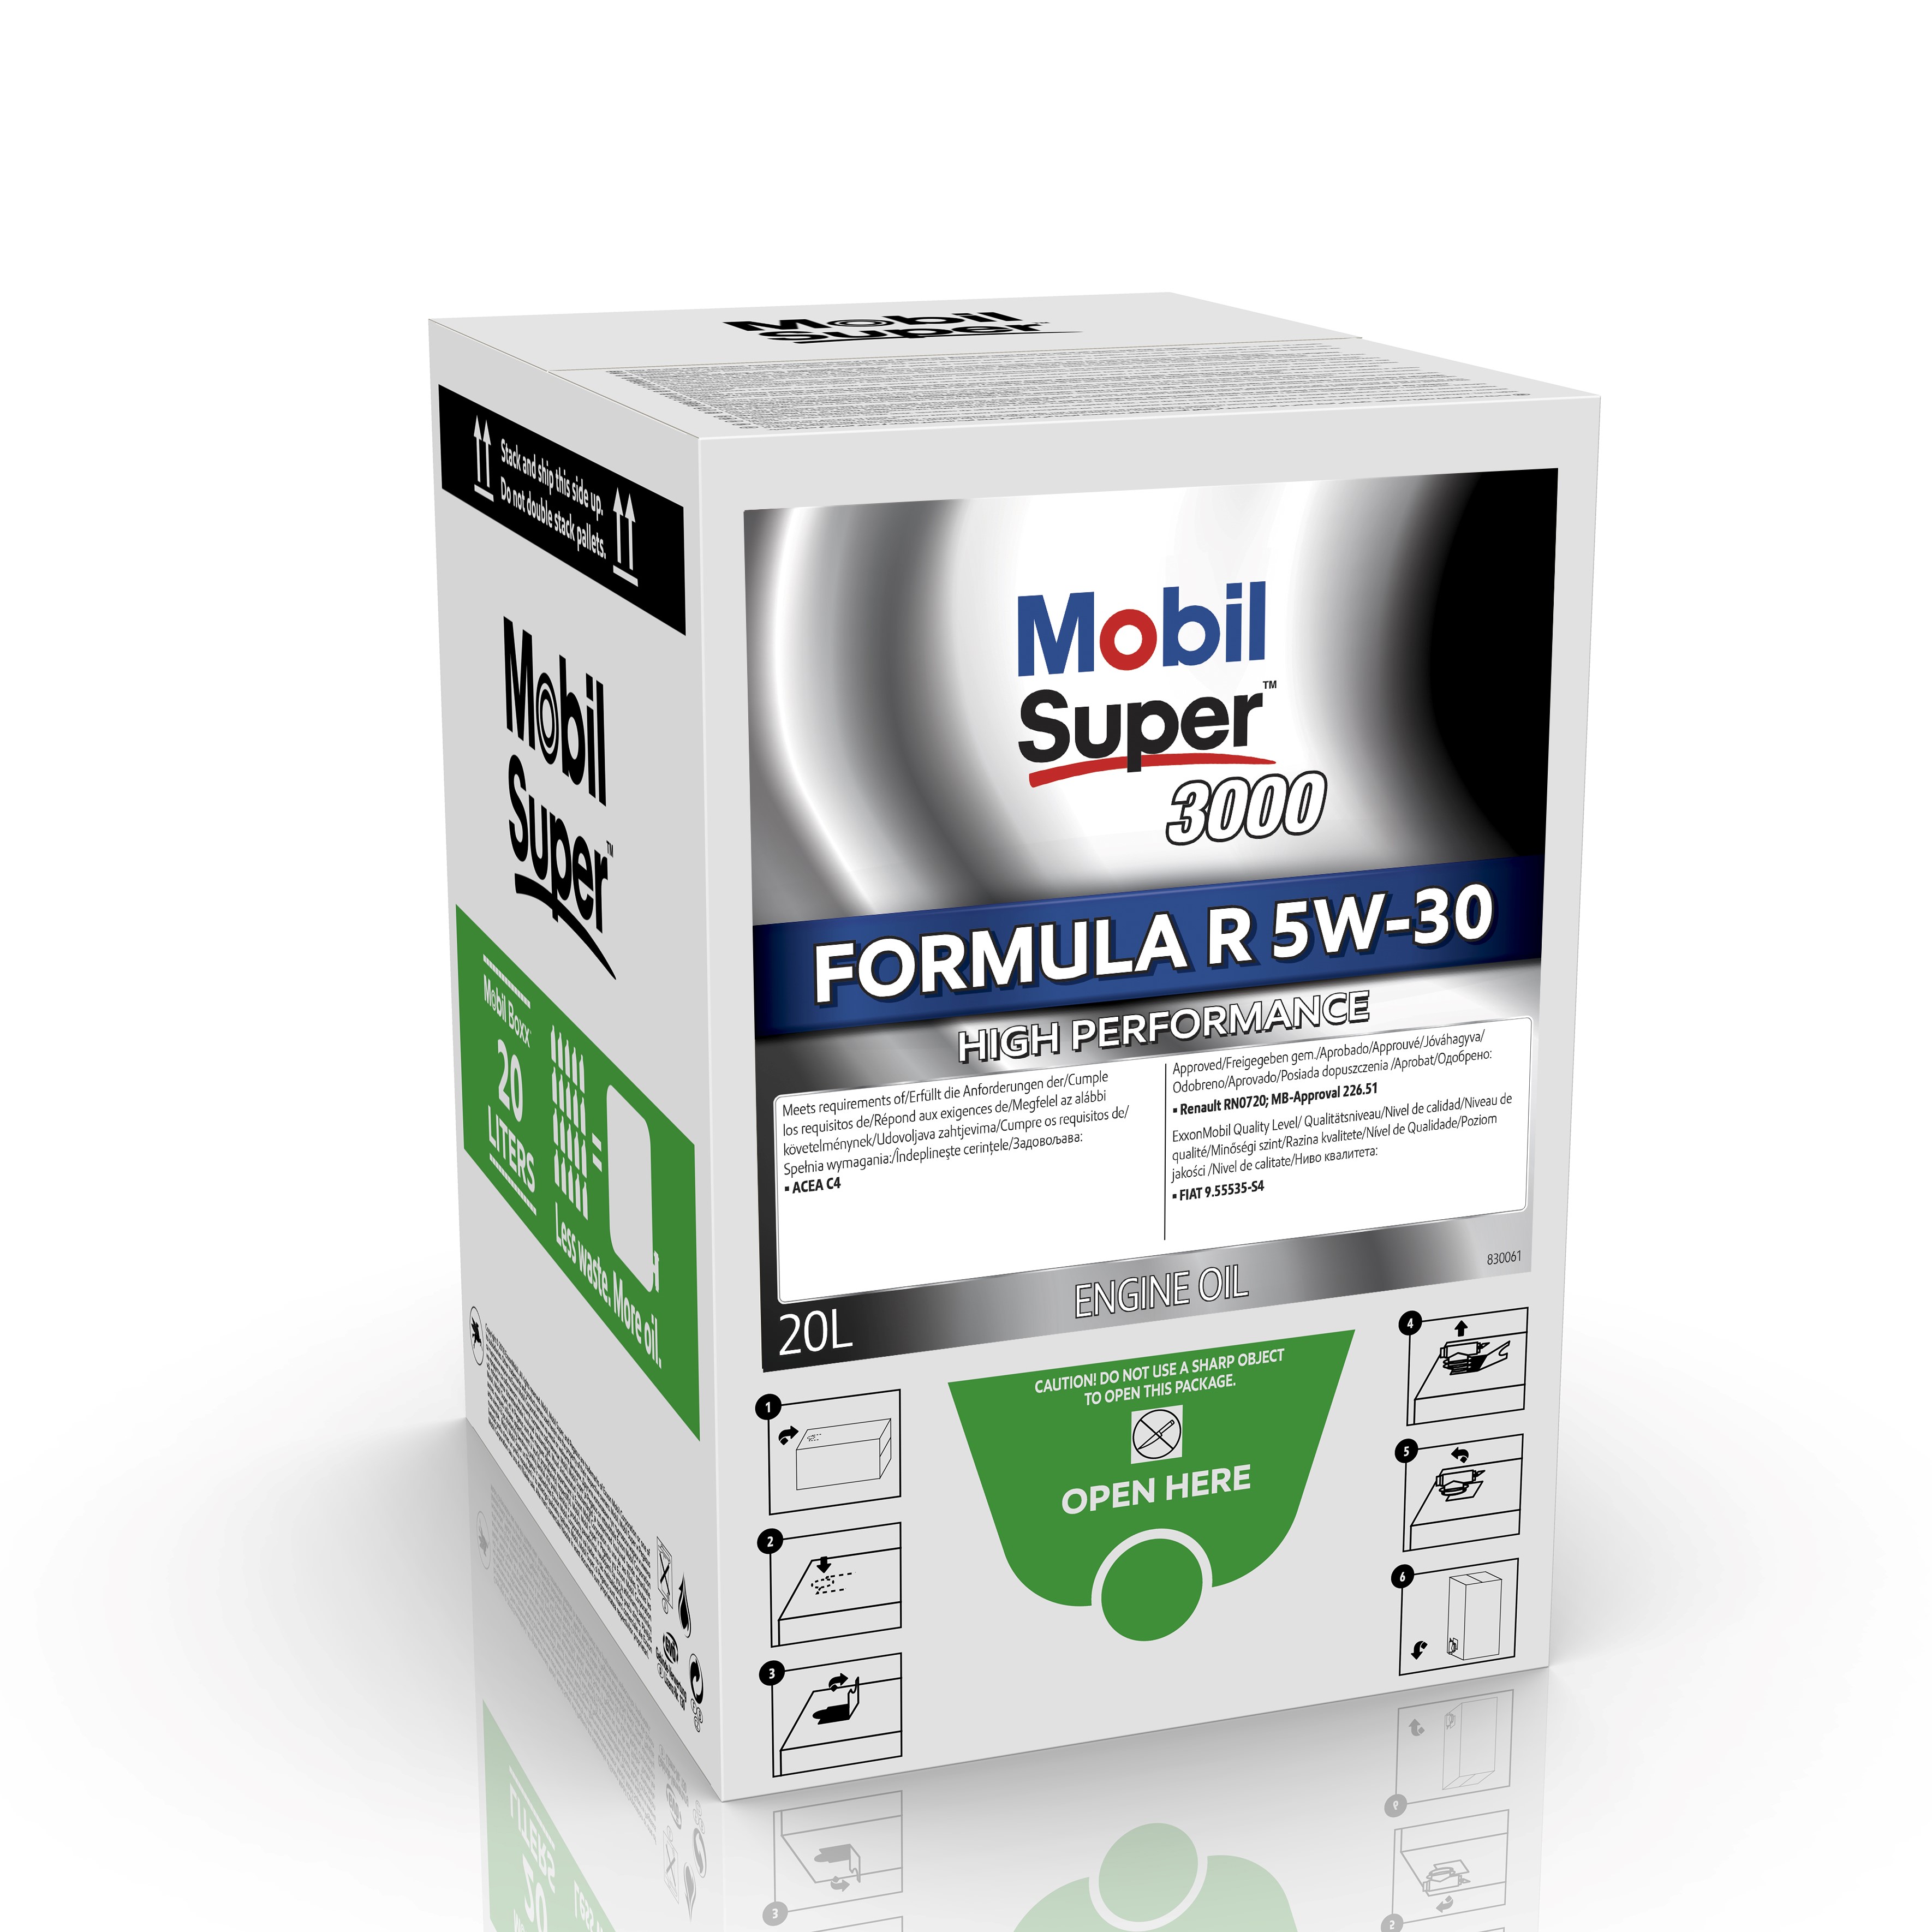 MOBIL SUPER 3000 FORMULA R 5W-30 Boxx